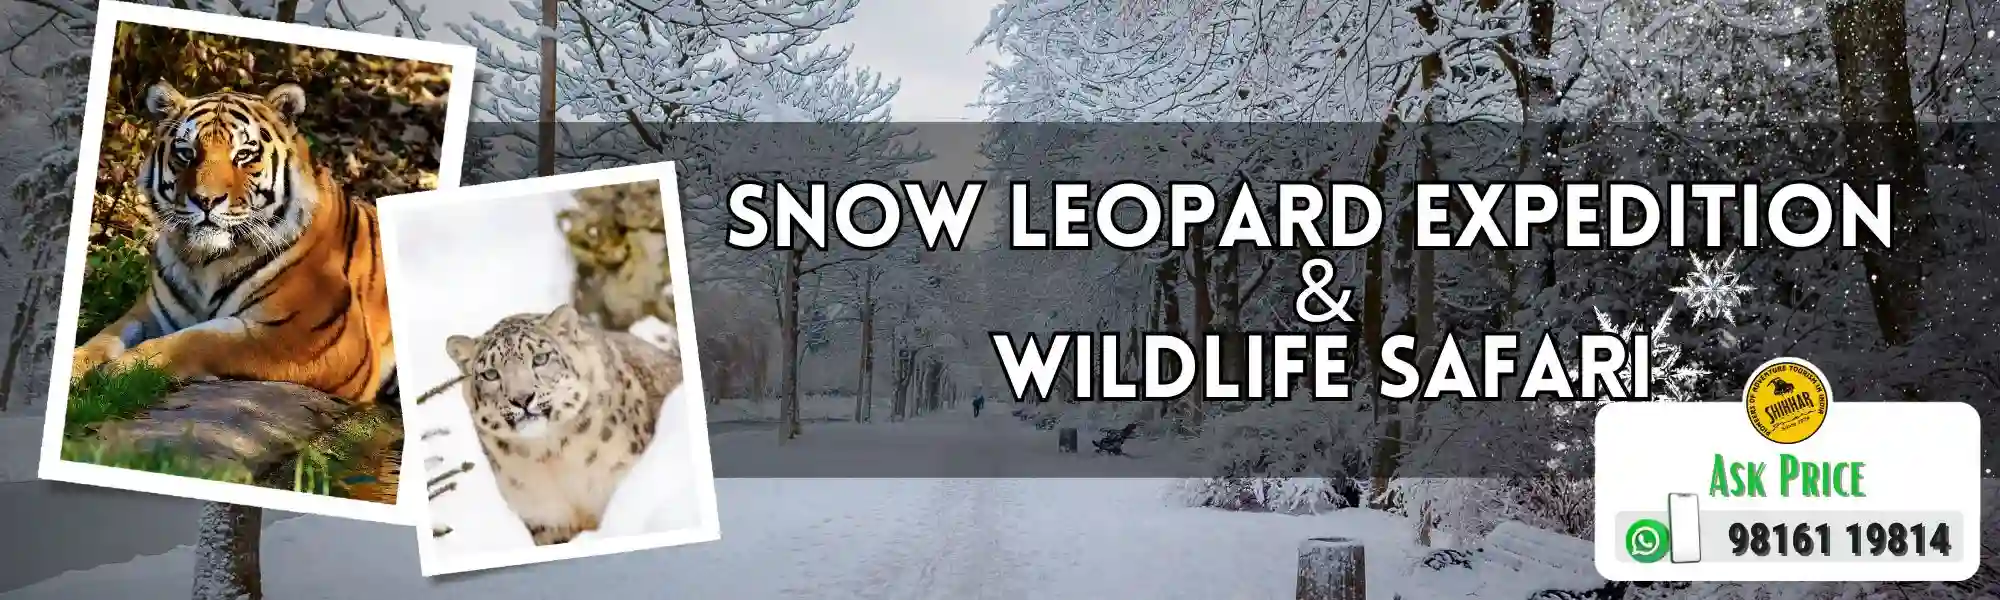 Wildlife Safari & Snow Leopard Expedition